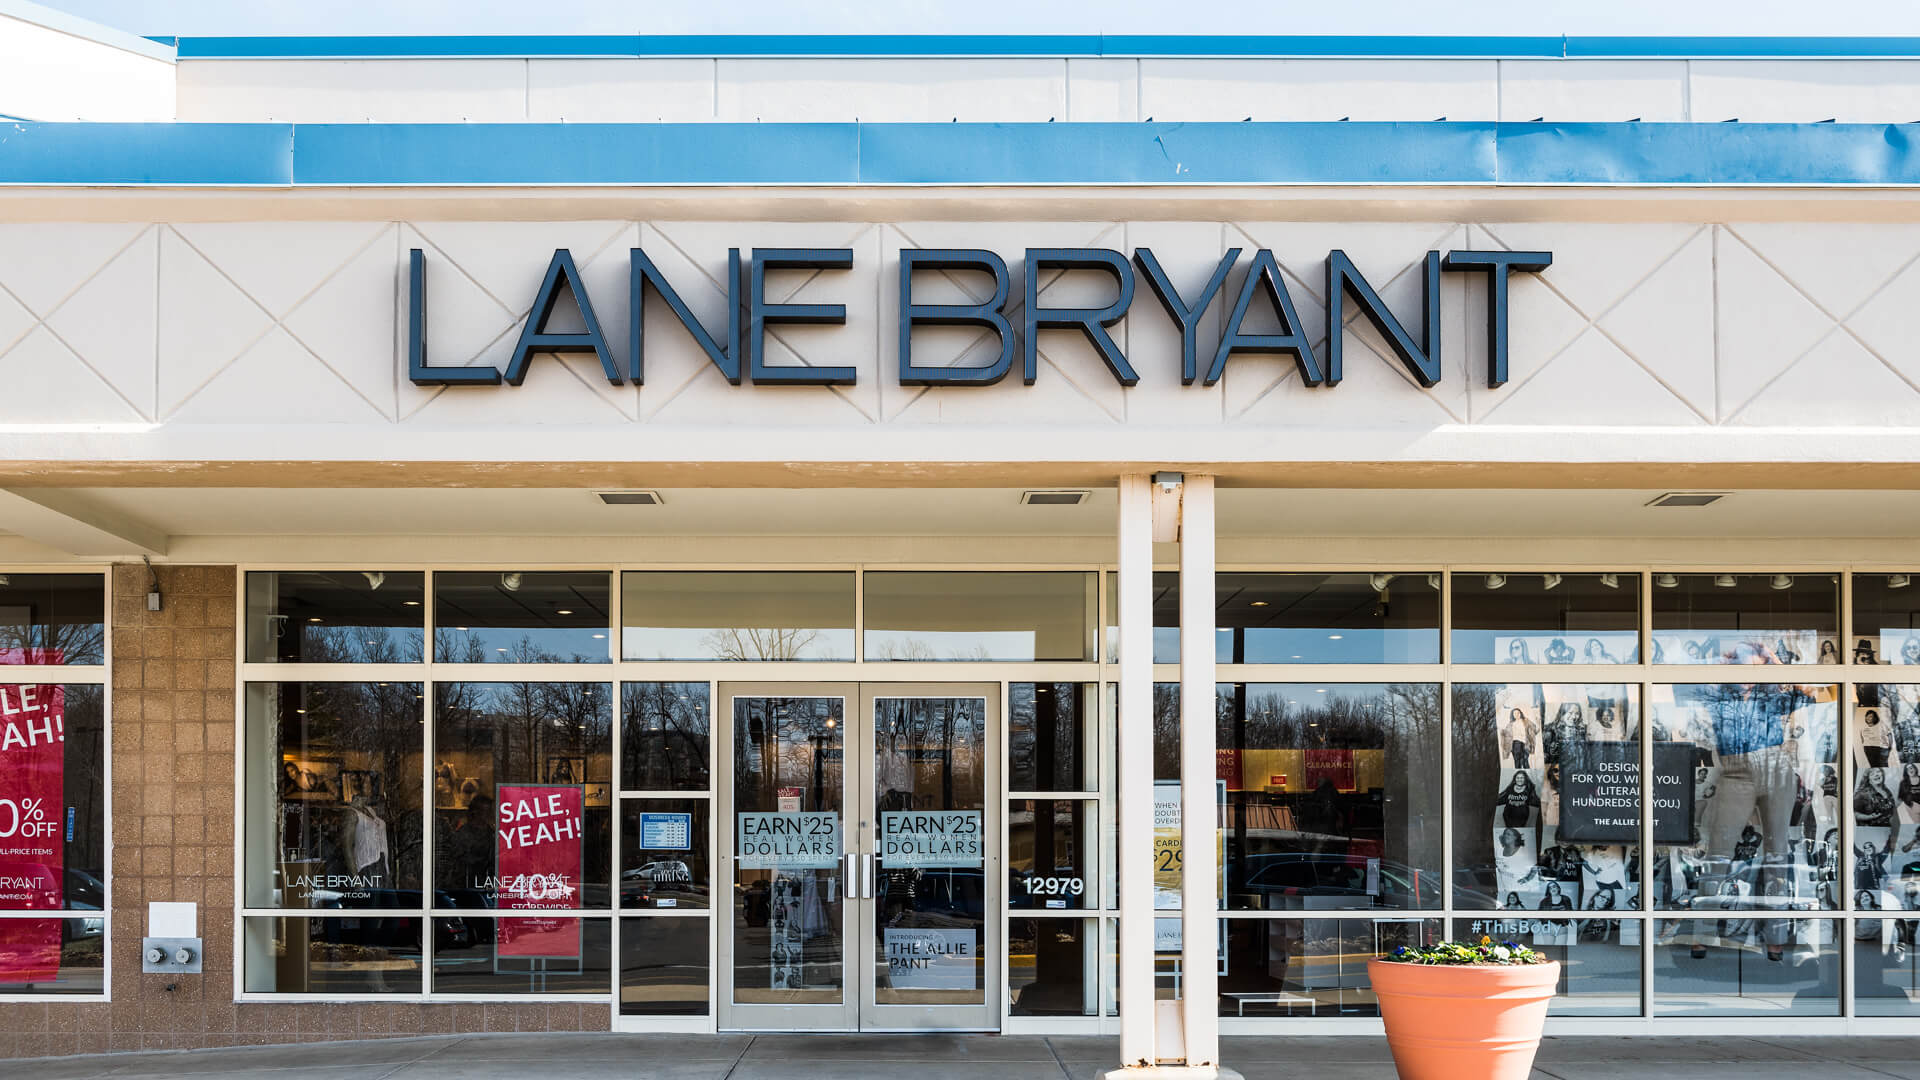 Lane Rewards by Lane Bryant by Lane Bryant Inc